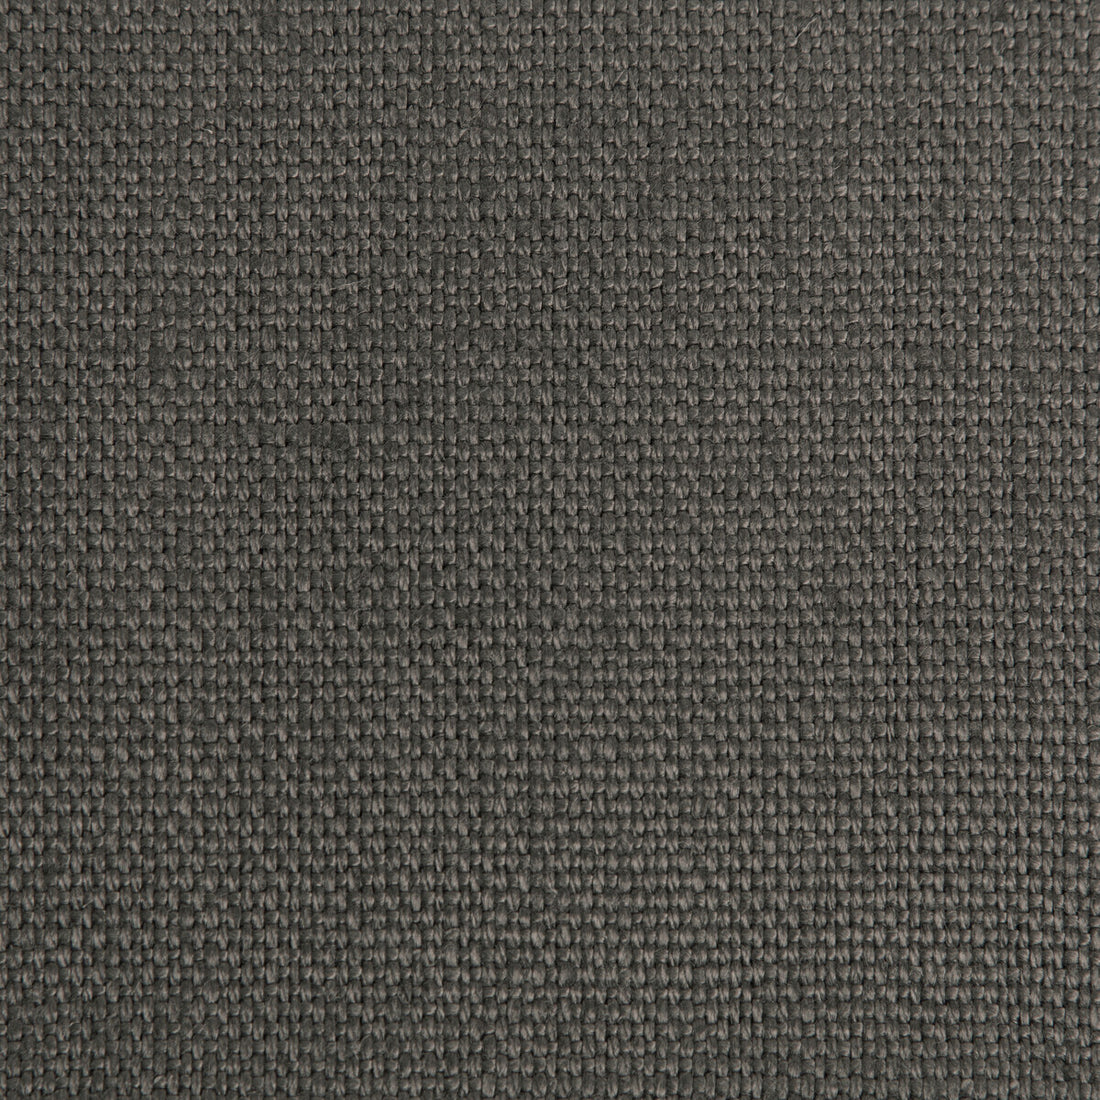 Stone Harbor fabric in flint color - pattern 27591.621.0 - by Kravet Basics